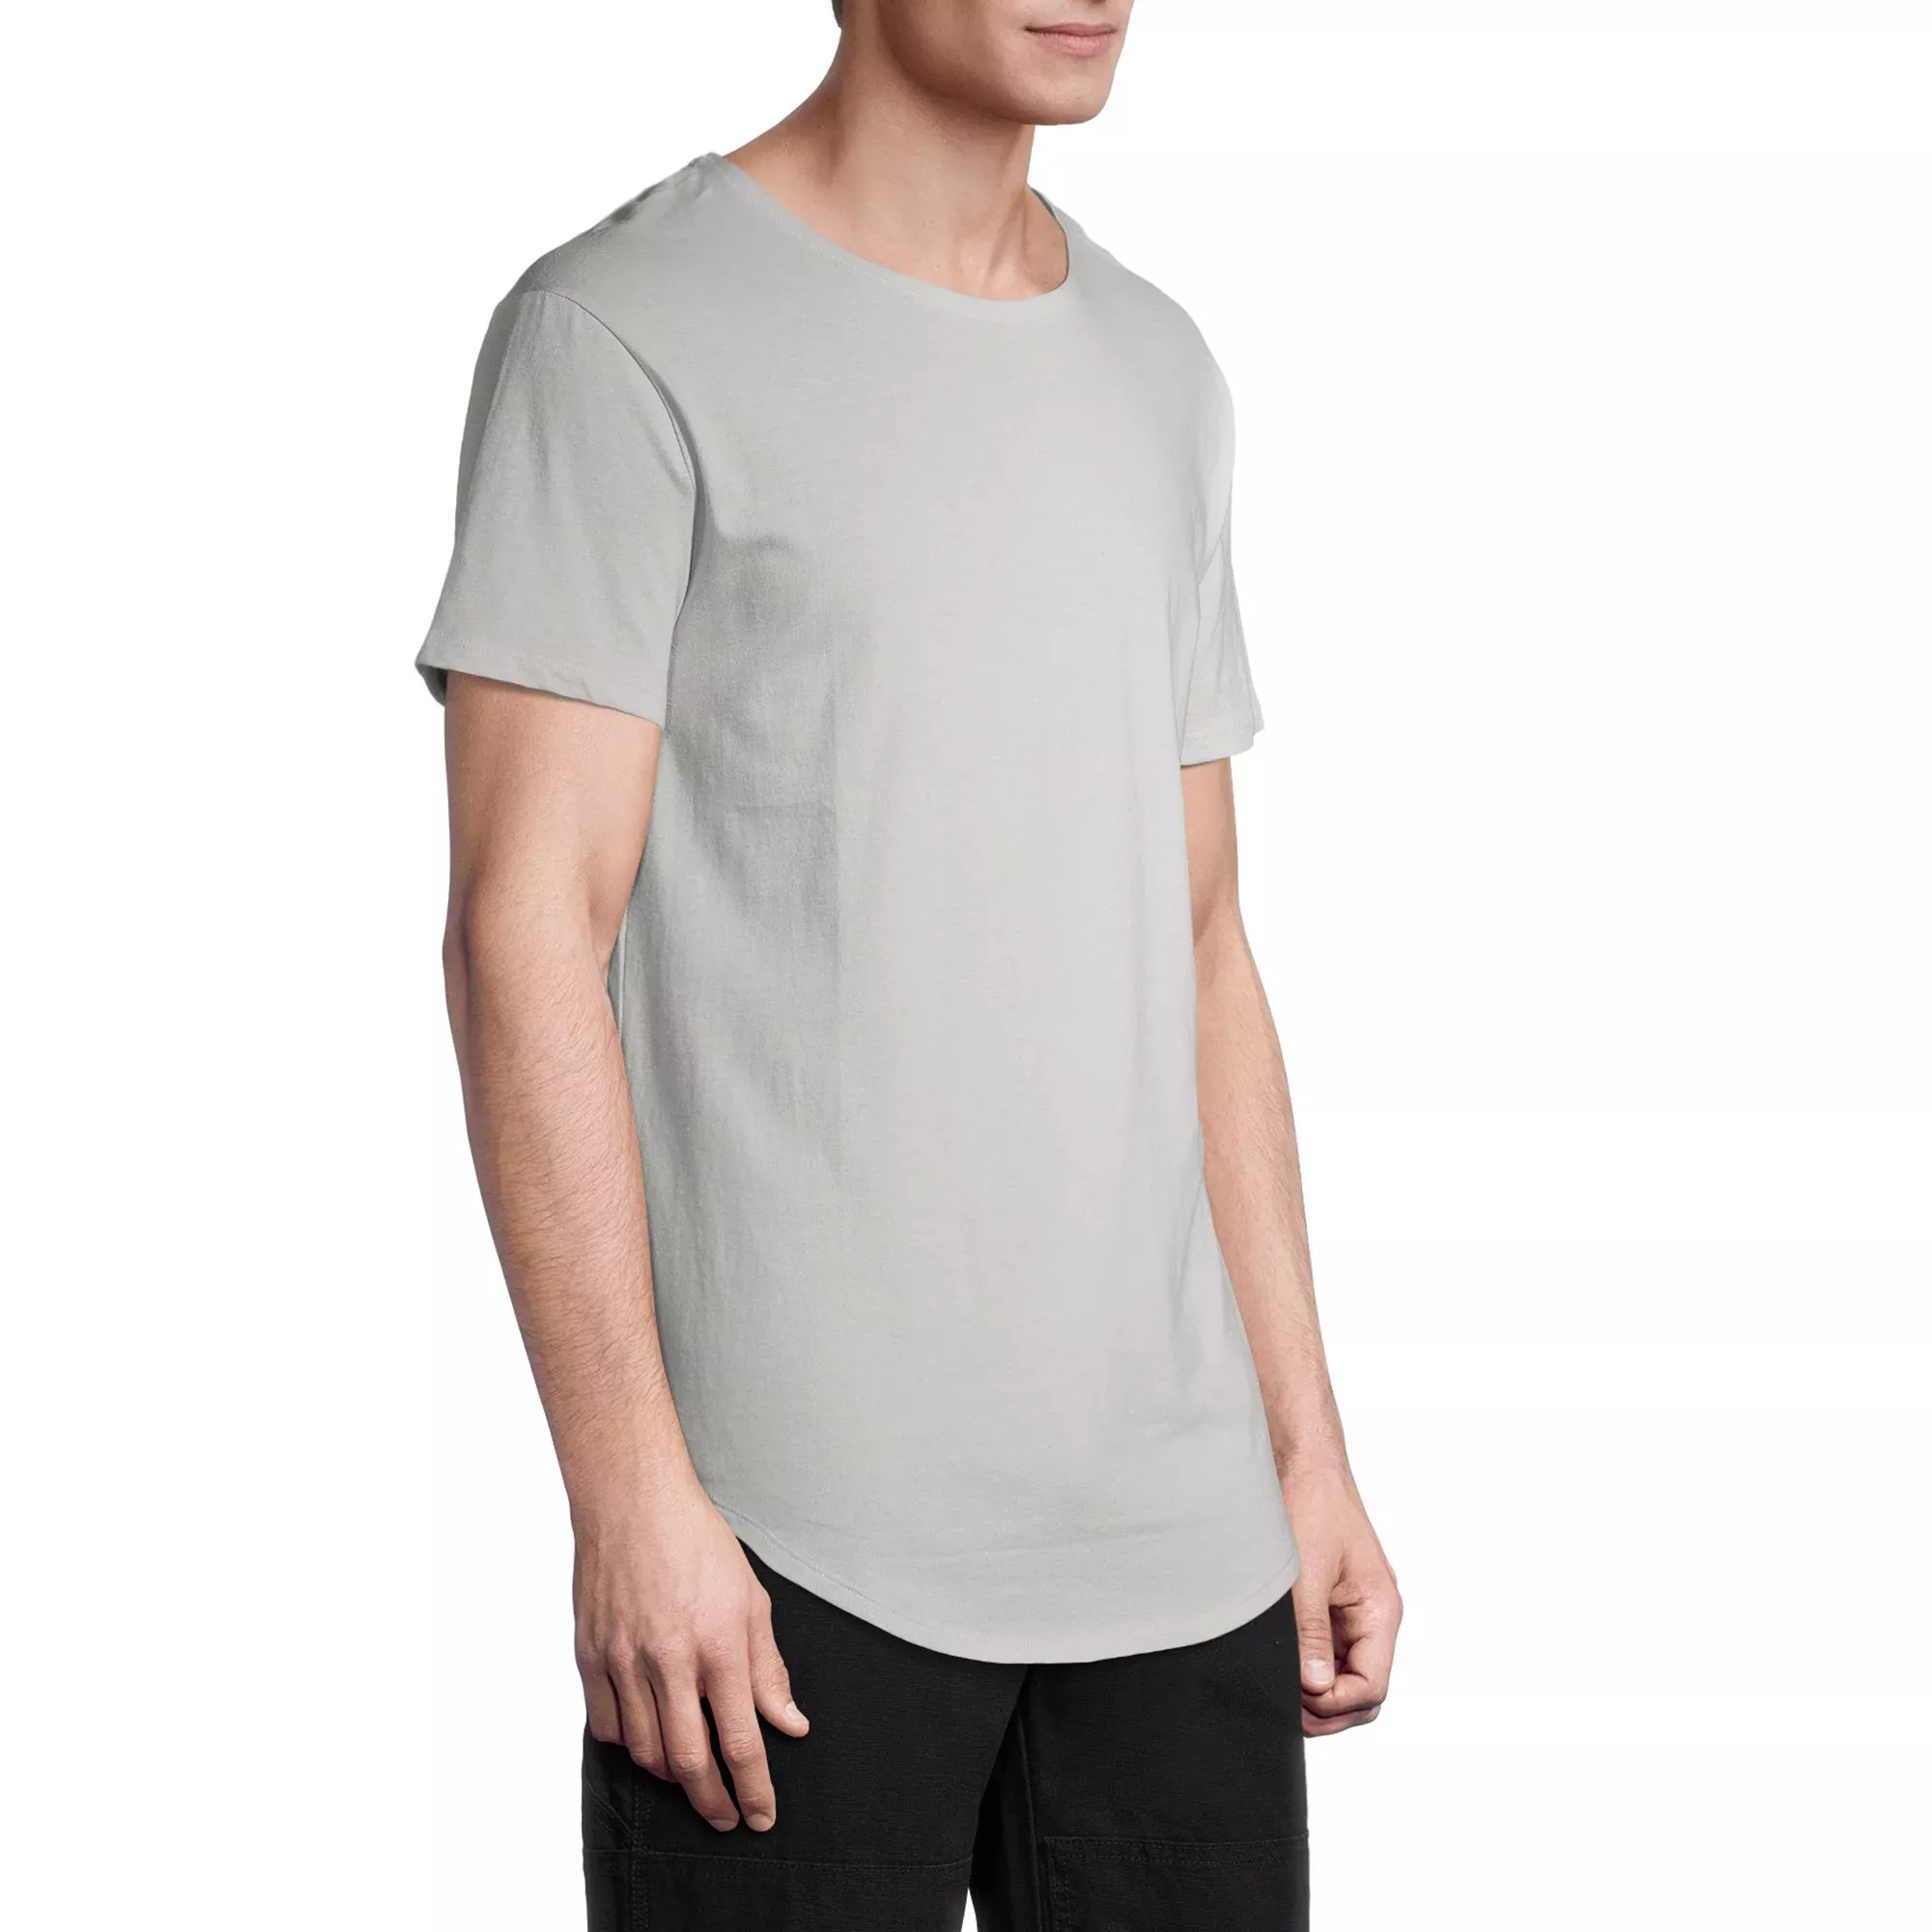 No Boundaries Men's Elongated T-Shirt with Short Sleeves, 2-Pack 